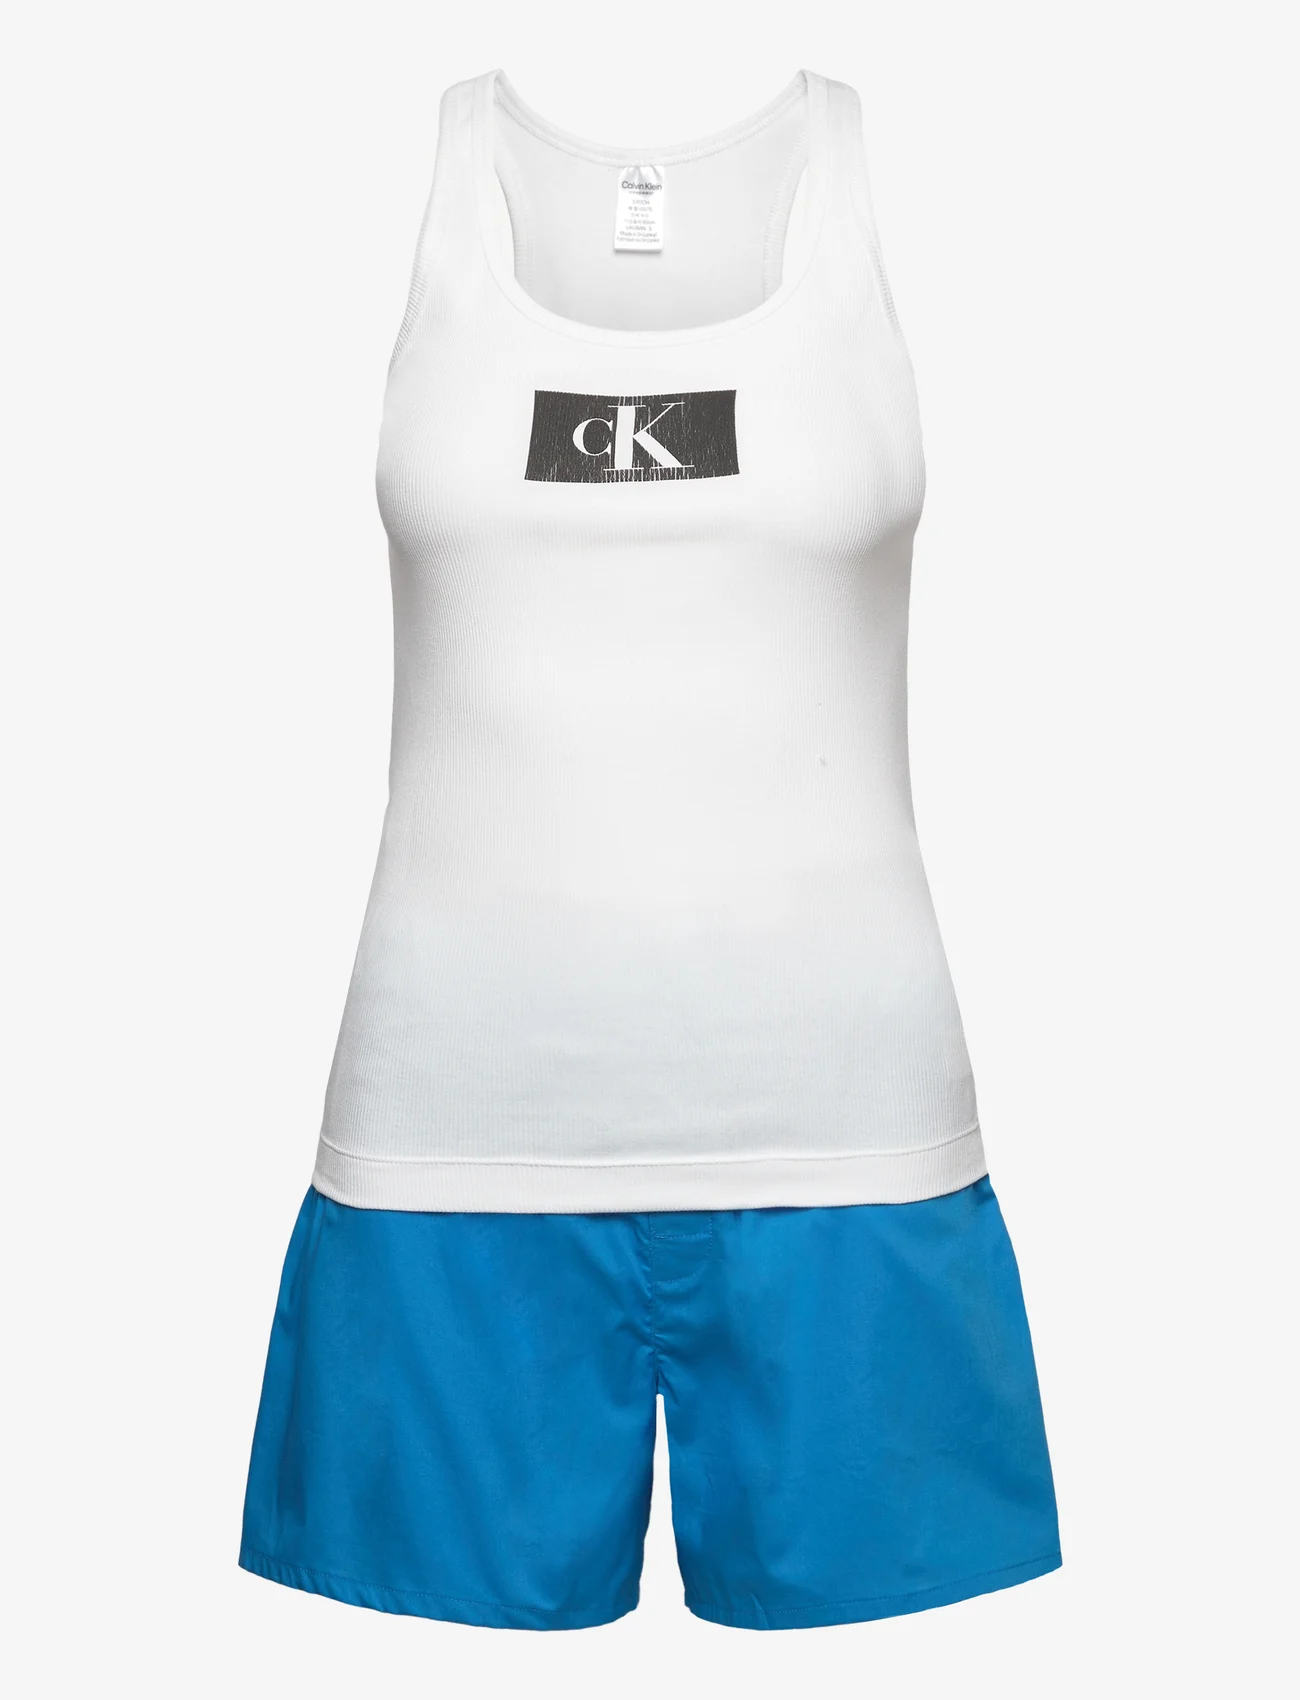 Calvin Klein - PJ IN A BAG - pyjamas - white top/brilliant blue bottom/bag - 0